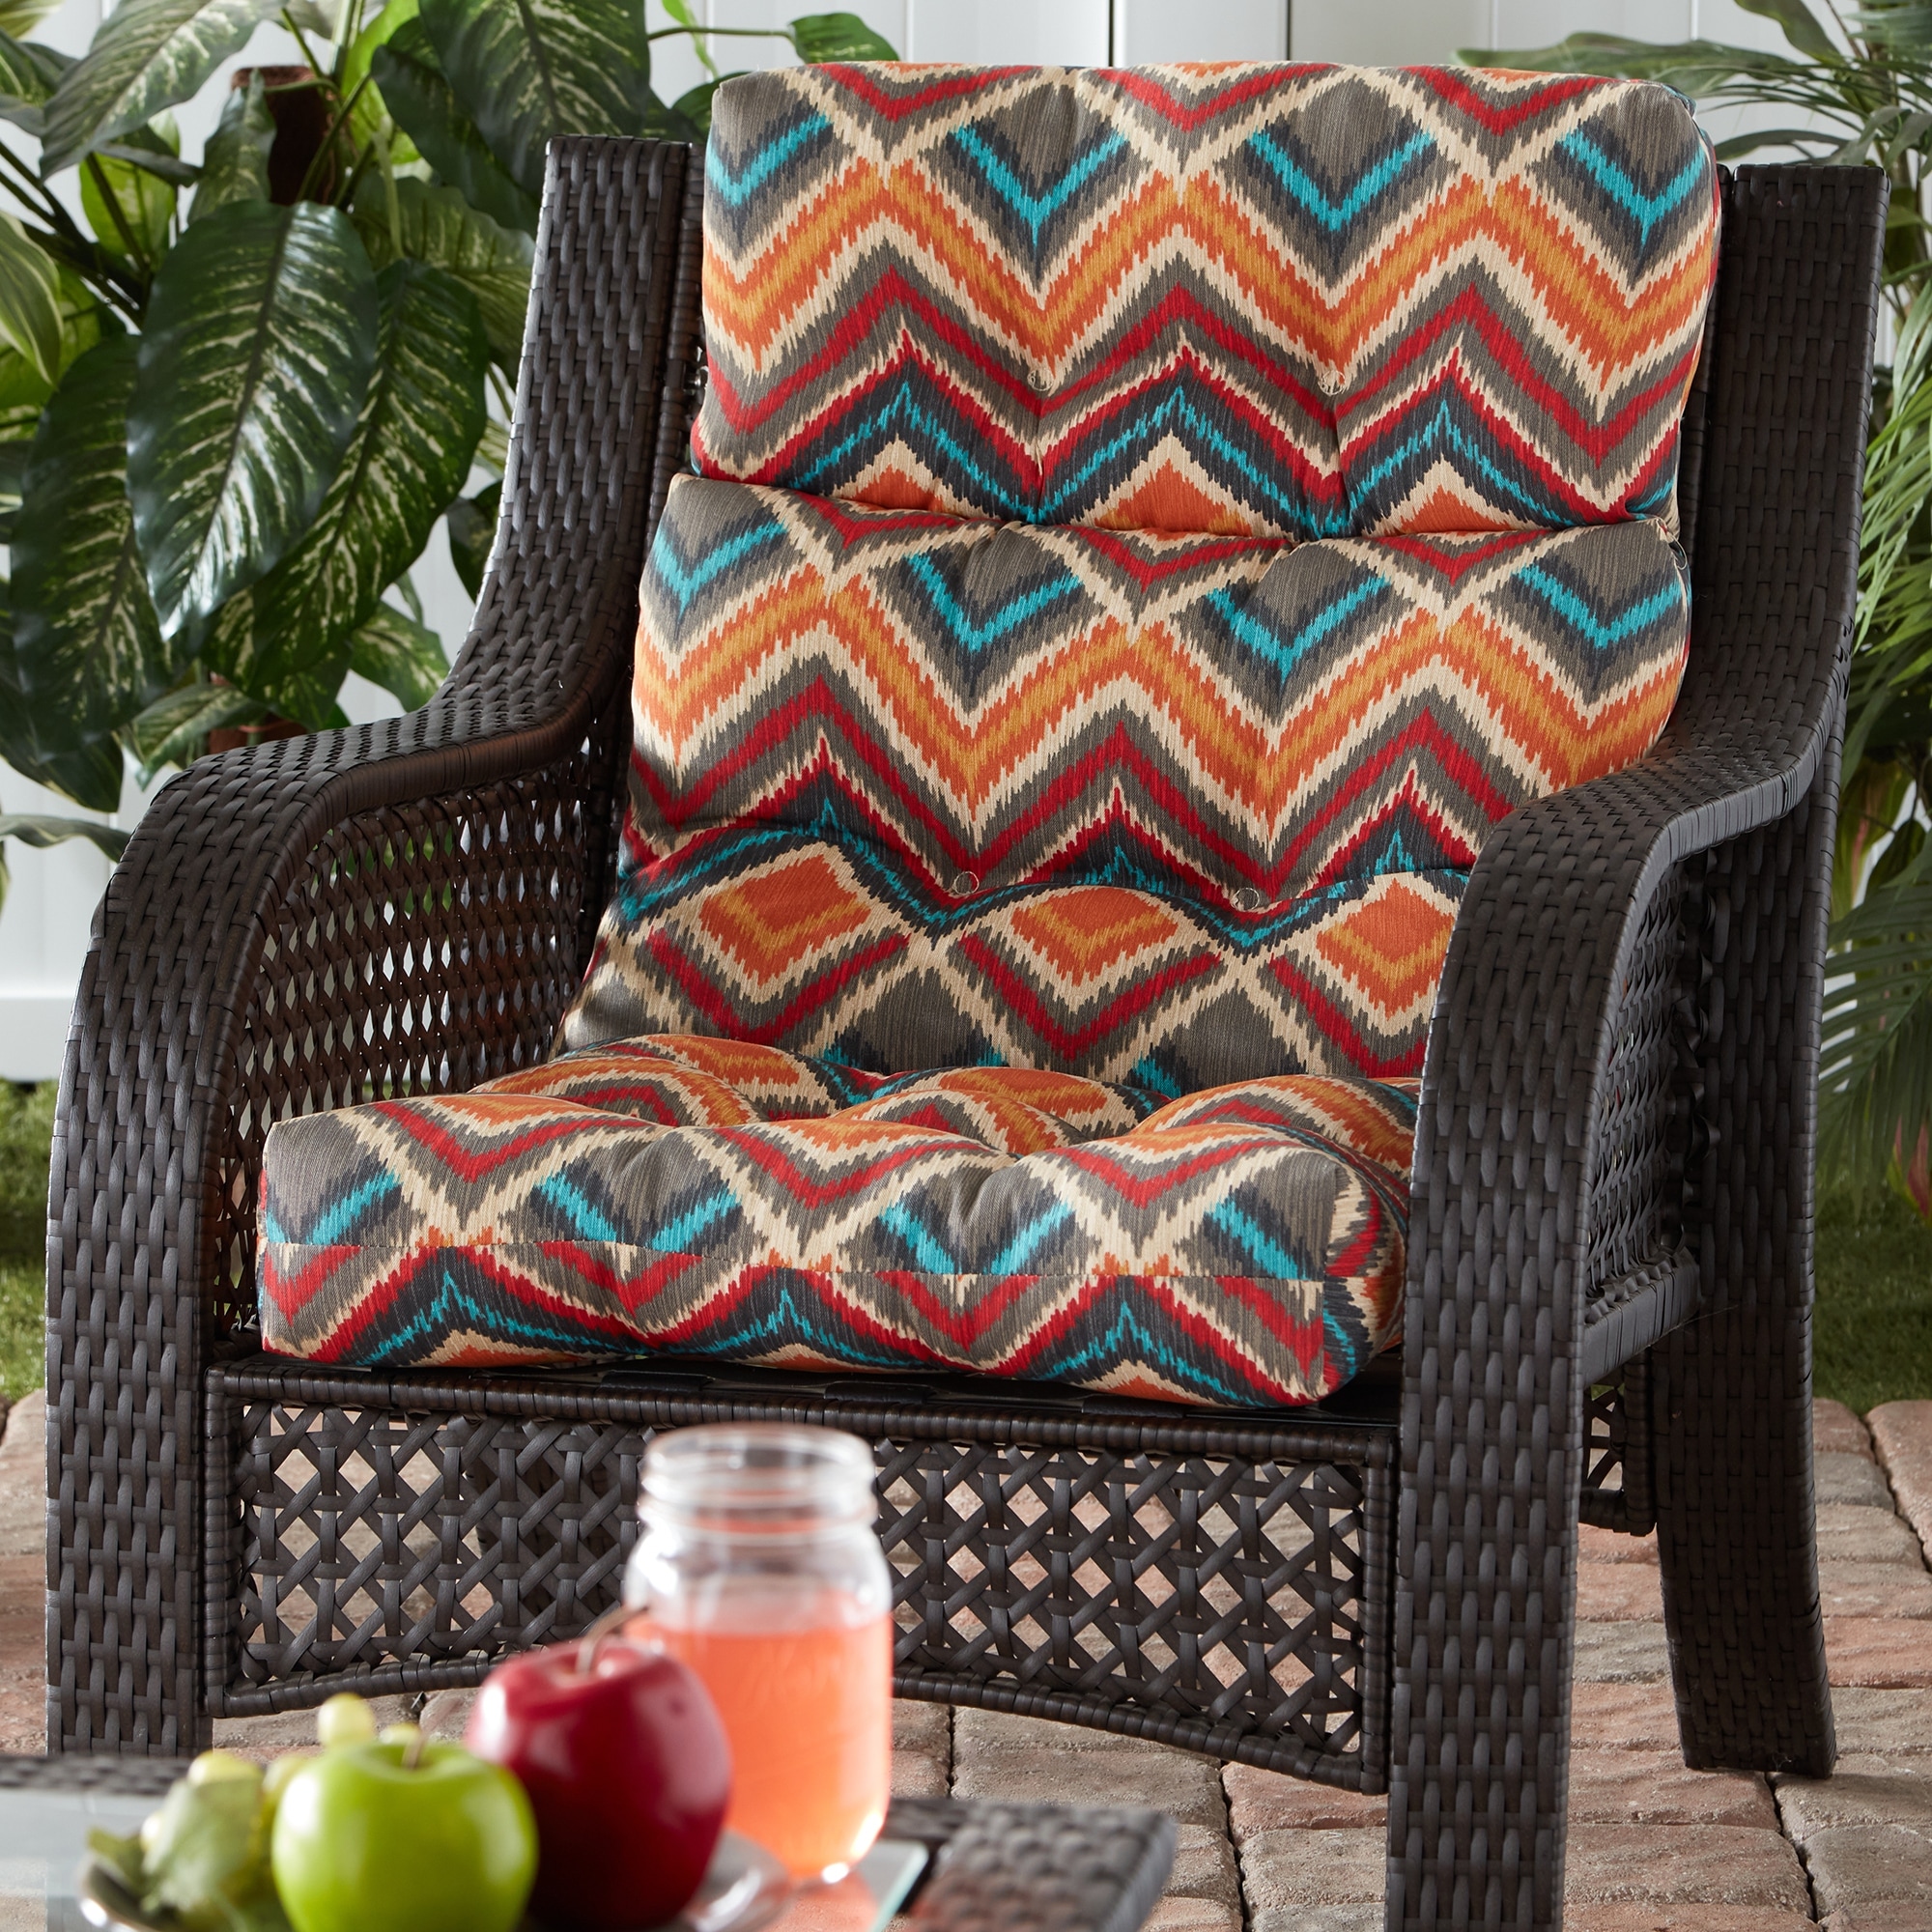 Greendale Home Fashions Indigo 44 x 22 in. Outdoor High Back Chair Cushion